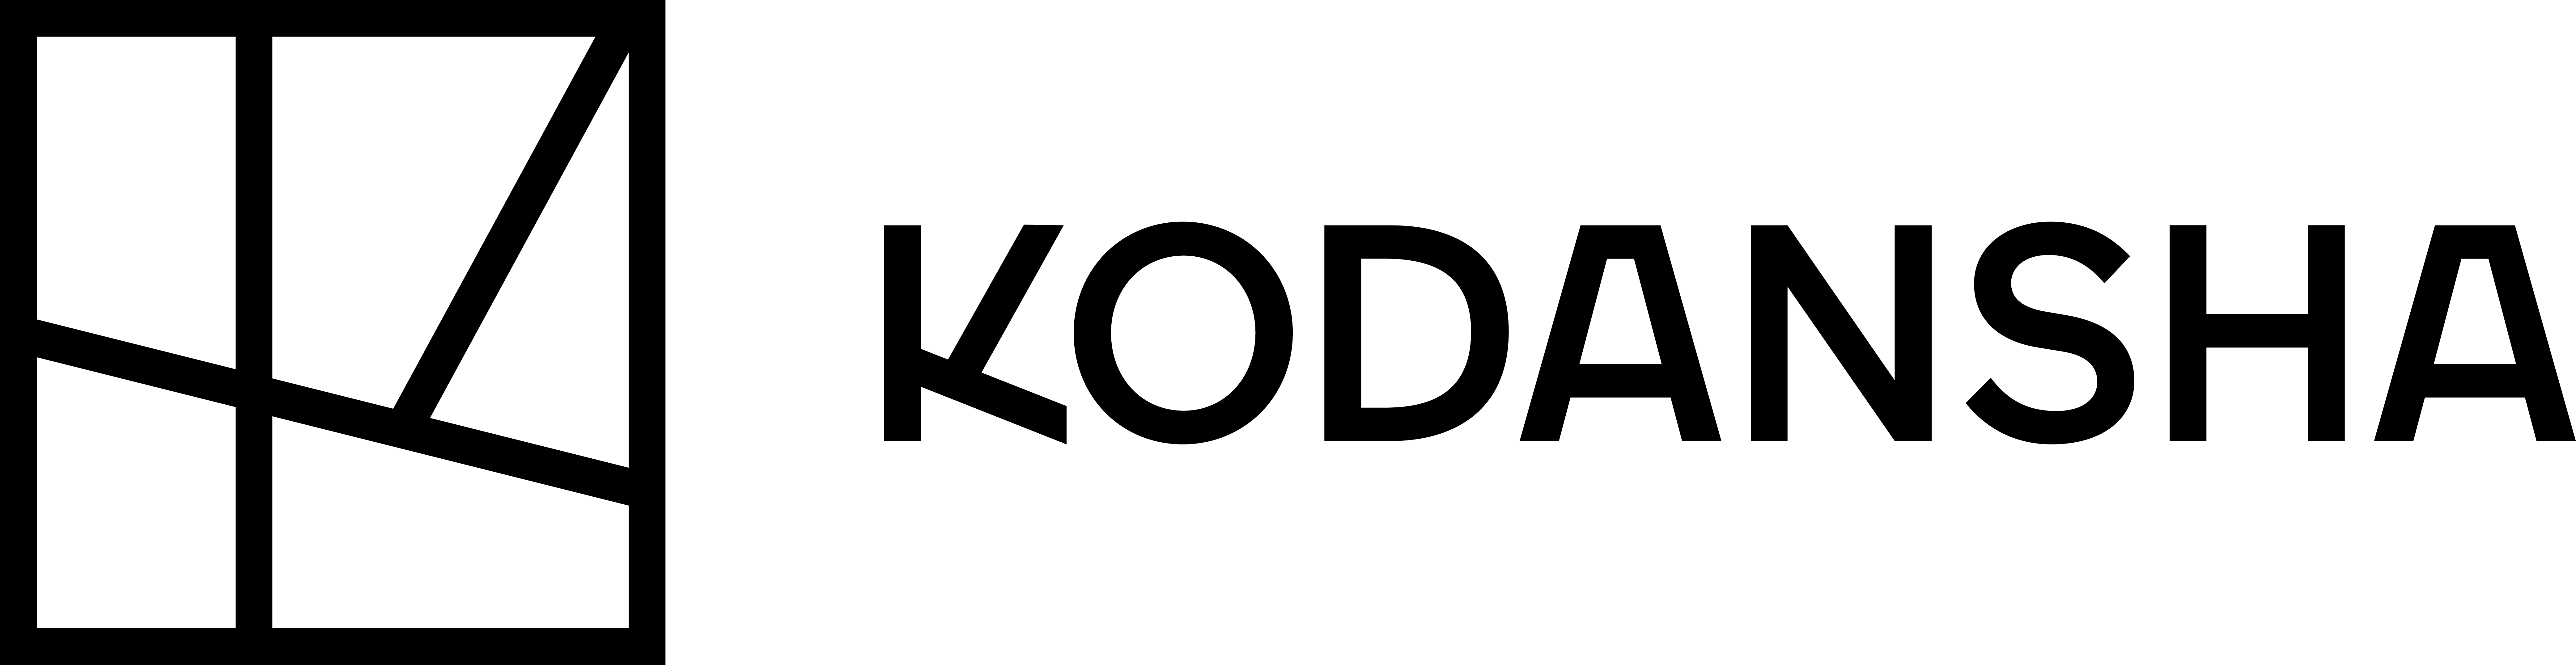 Kodansha_Logo_Horizontal Lockup_CMYK